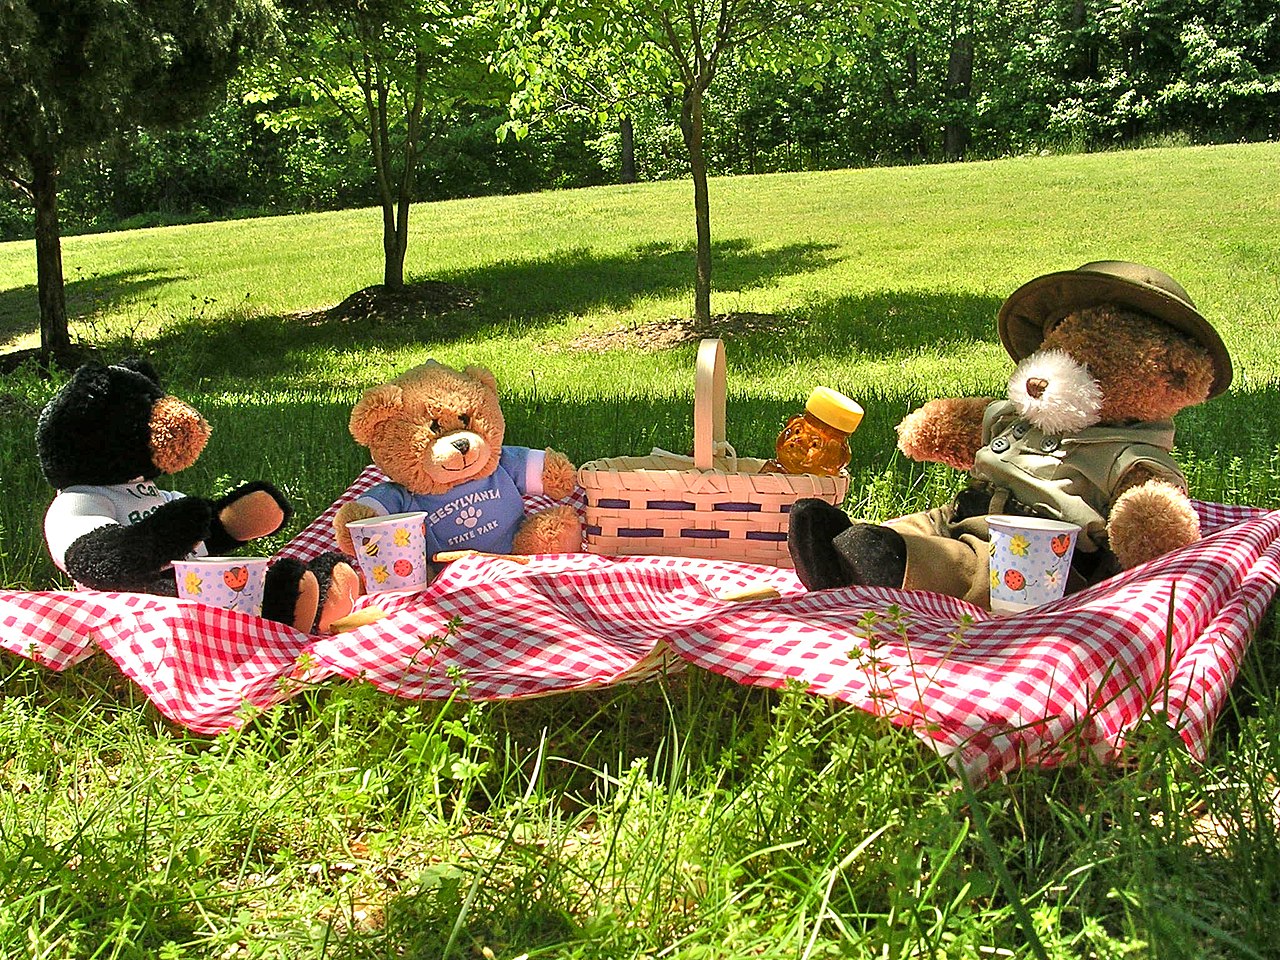 Teddy bears on a picnic blanket